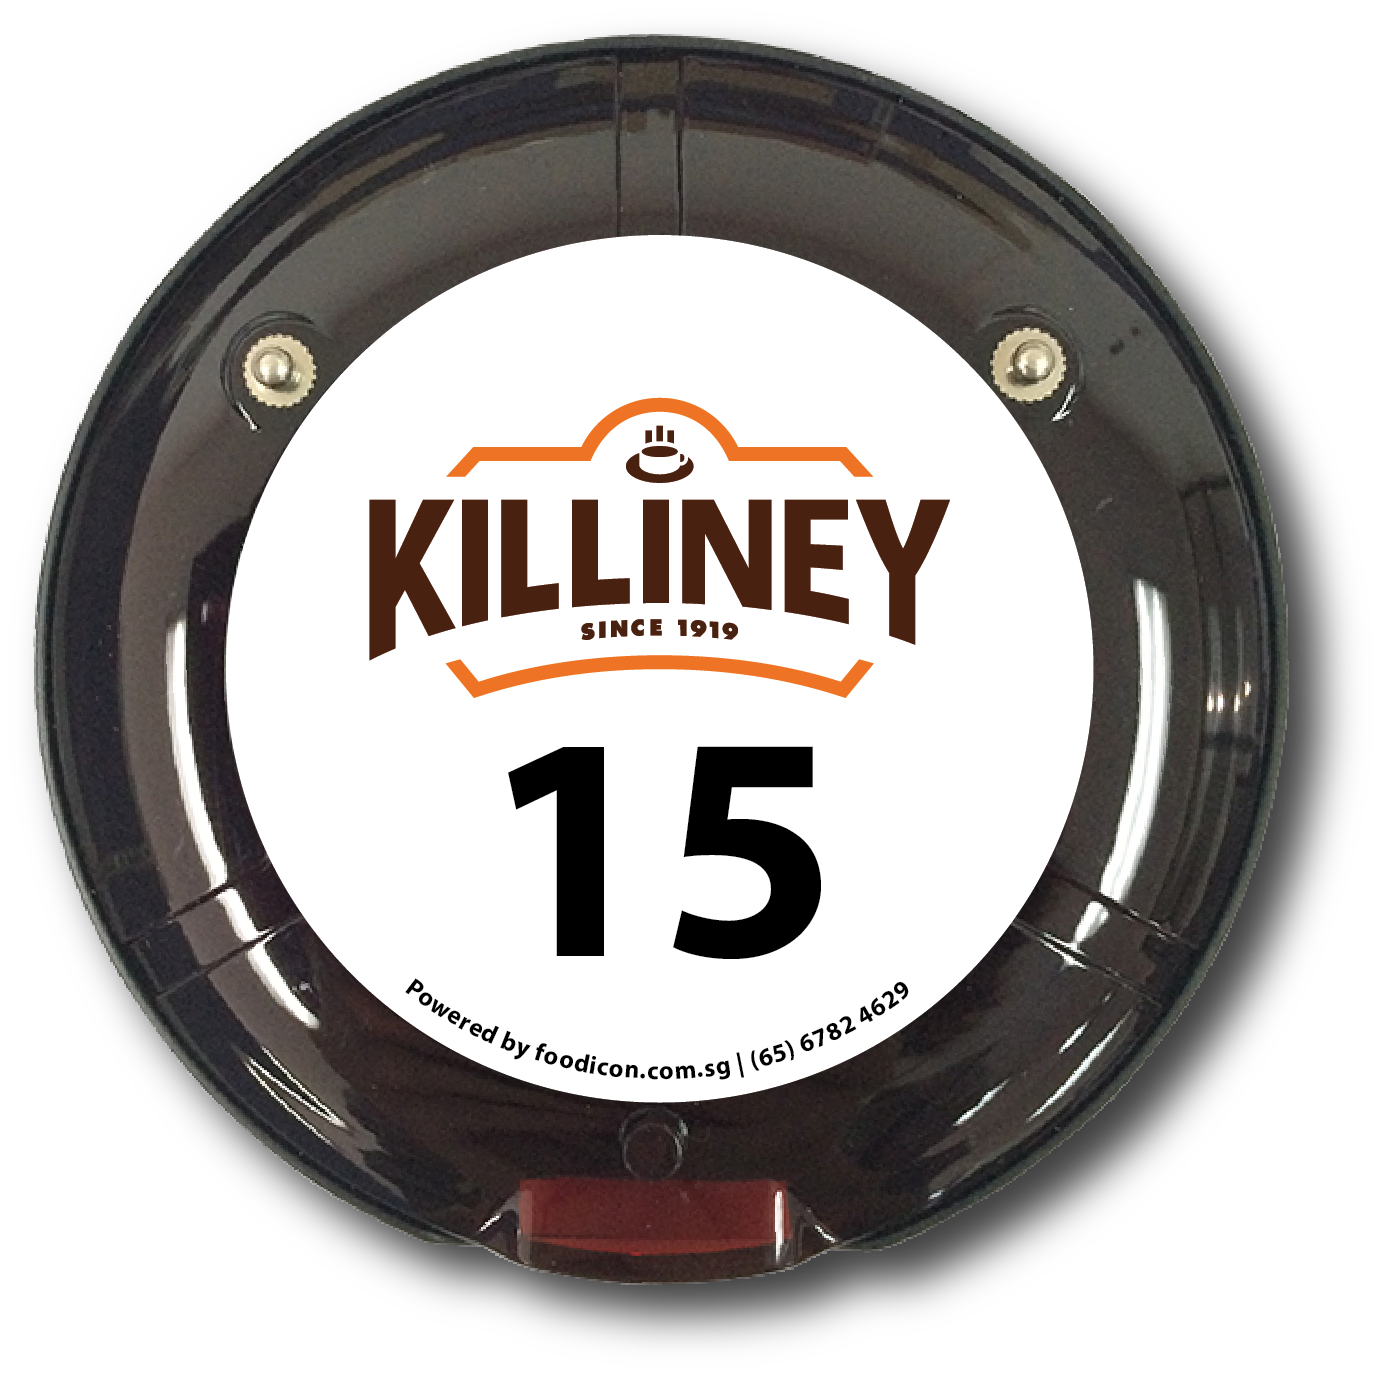 Food Icon Paging System - Killiney Kopitiam